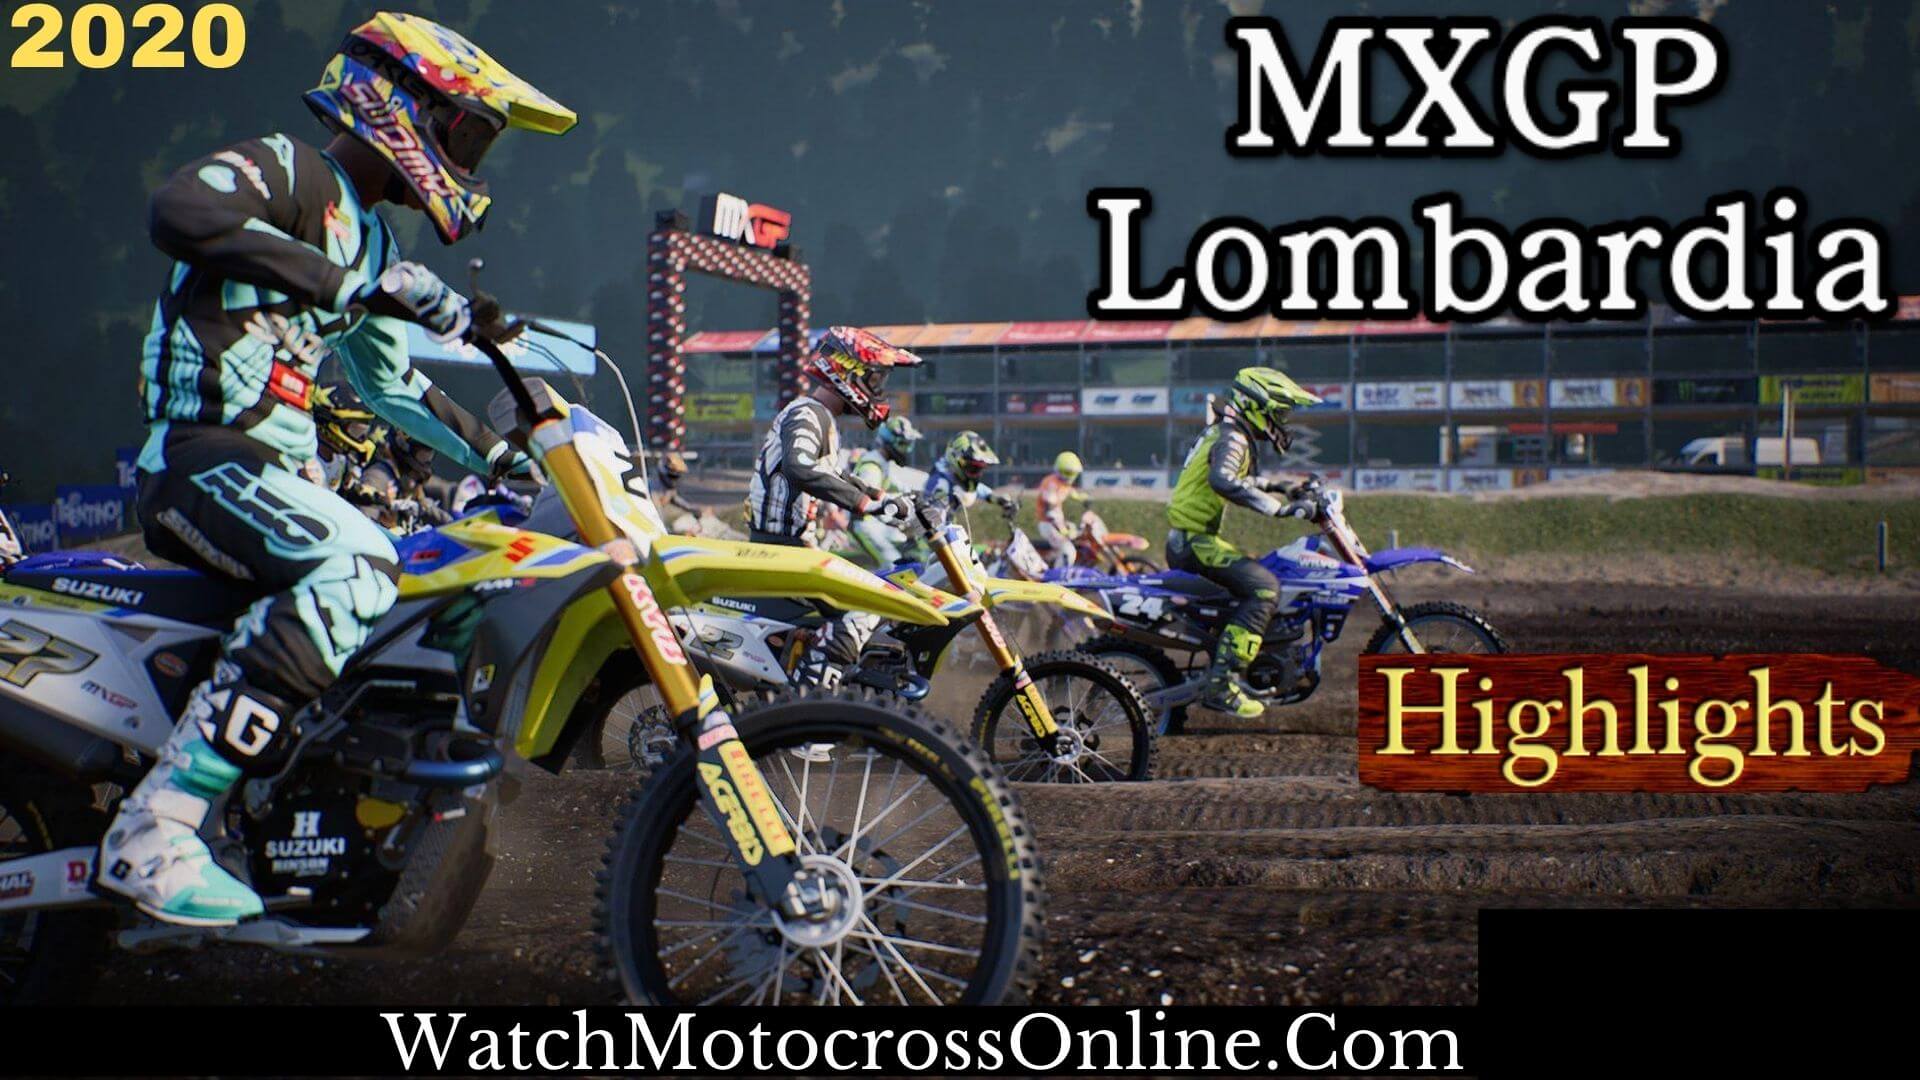 Lombardia MXGP Highlights 2020